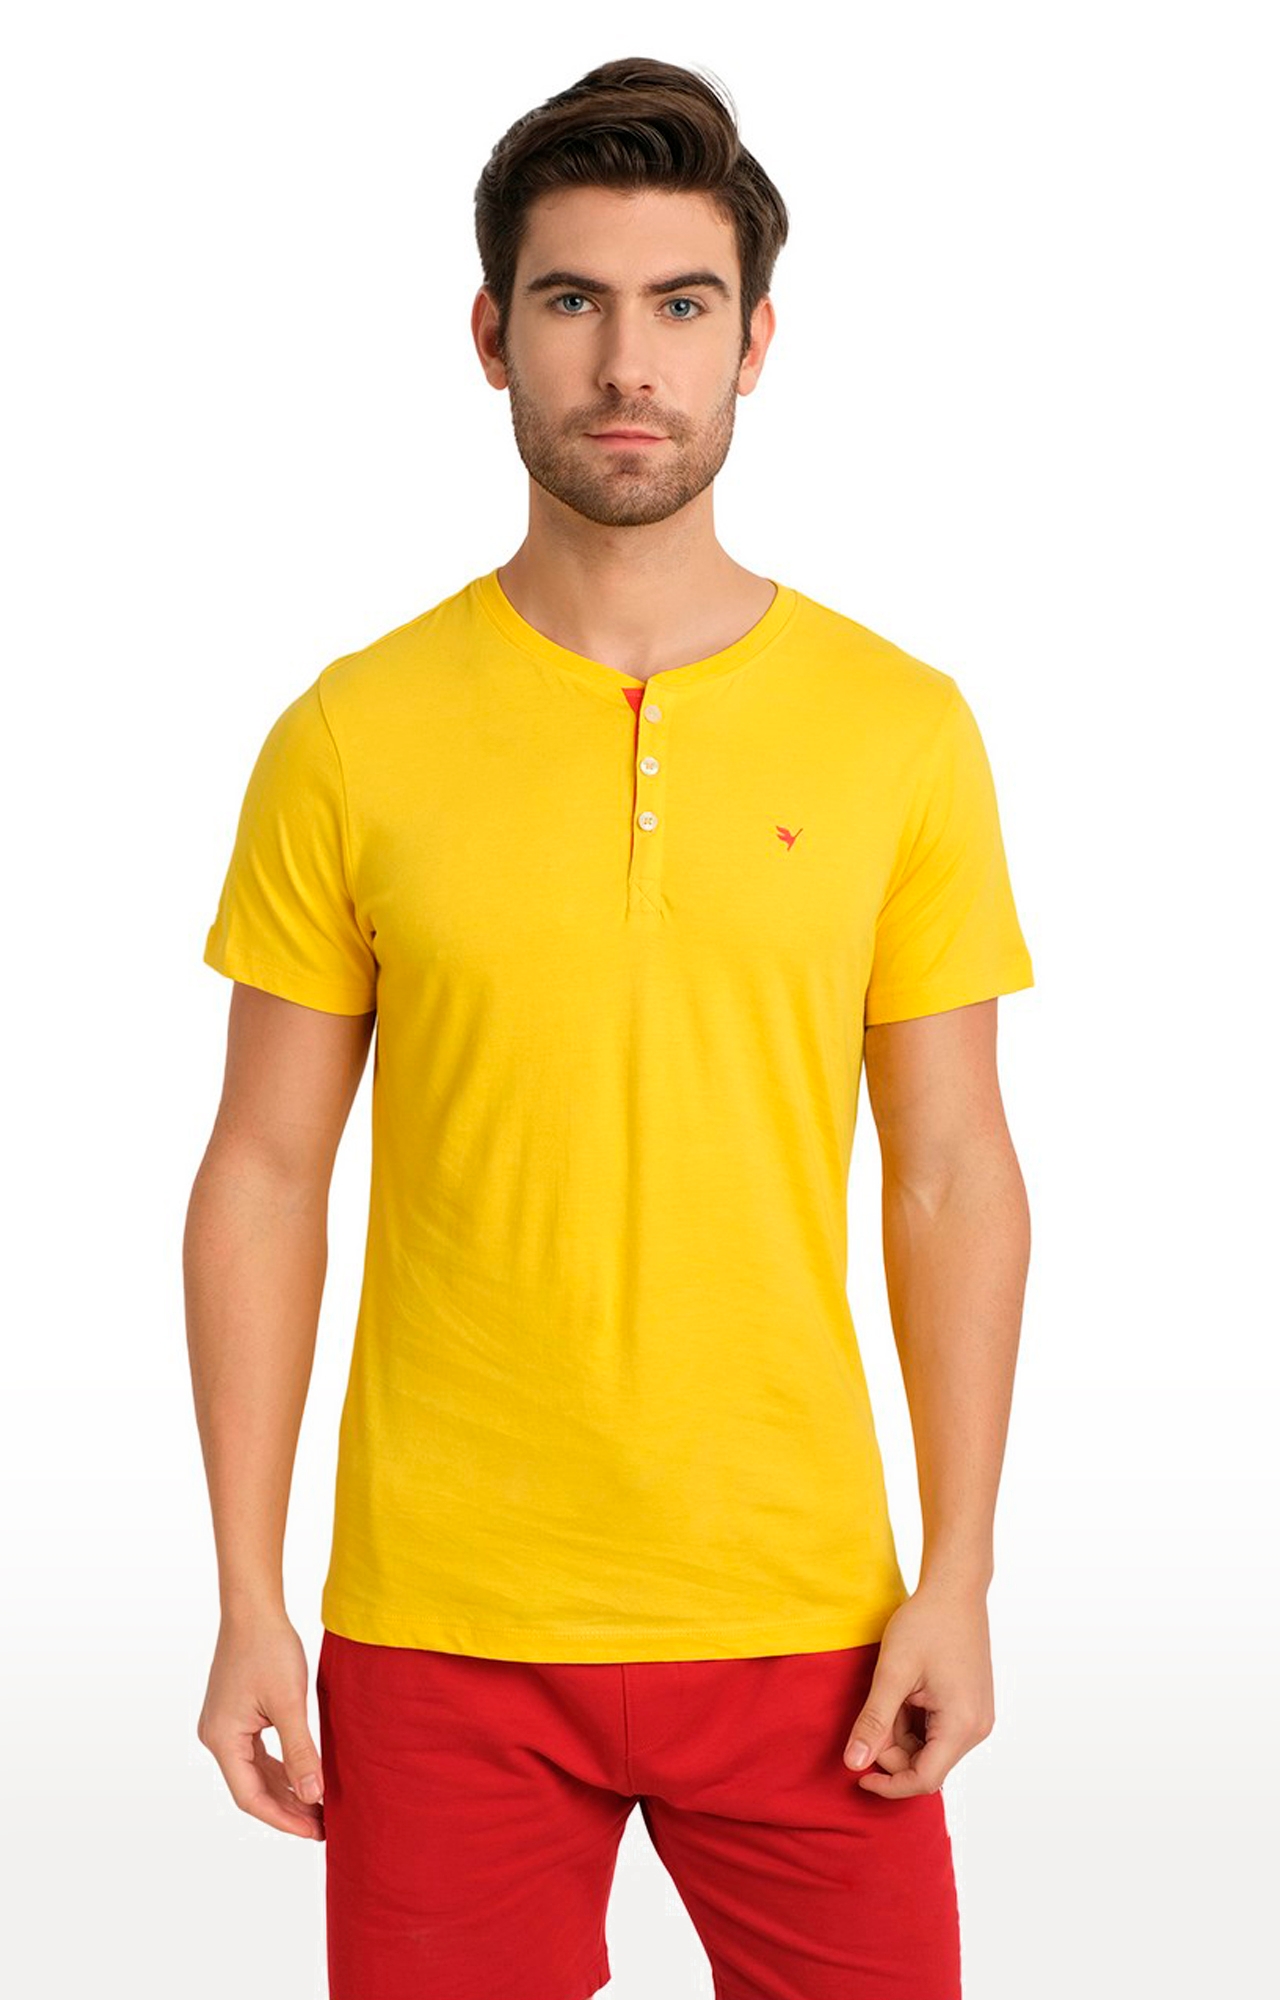 1.Buy Men's Yellow T-shirt Online | Pleasing Yellow Cotton Tshirt